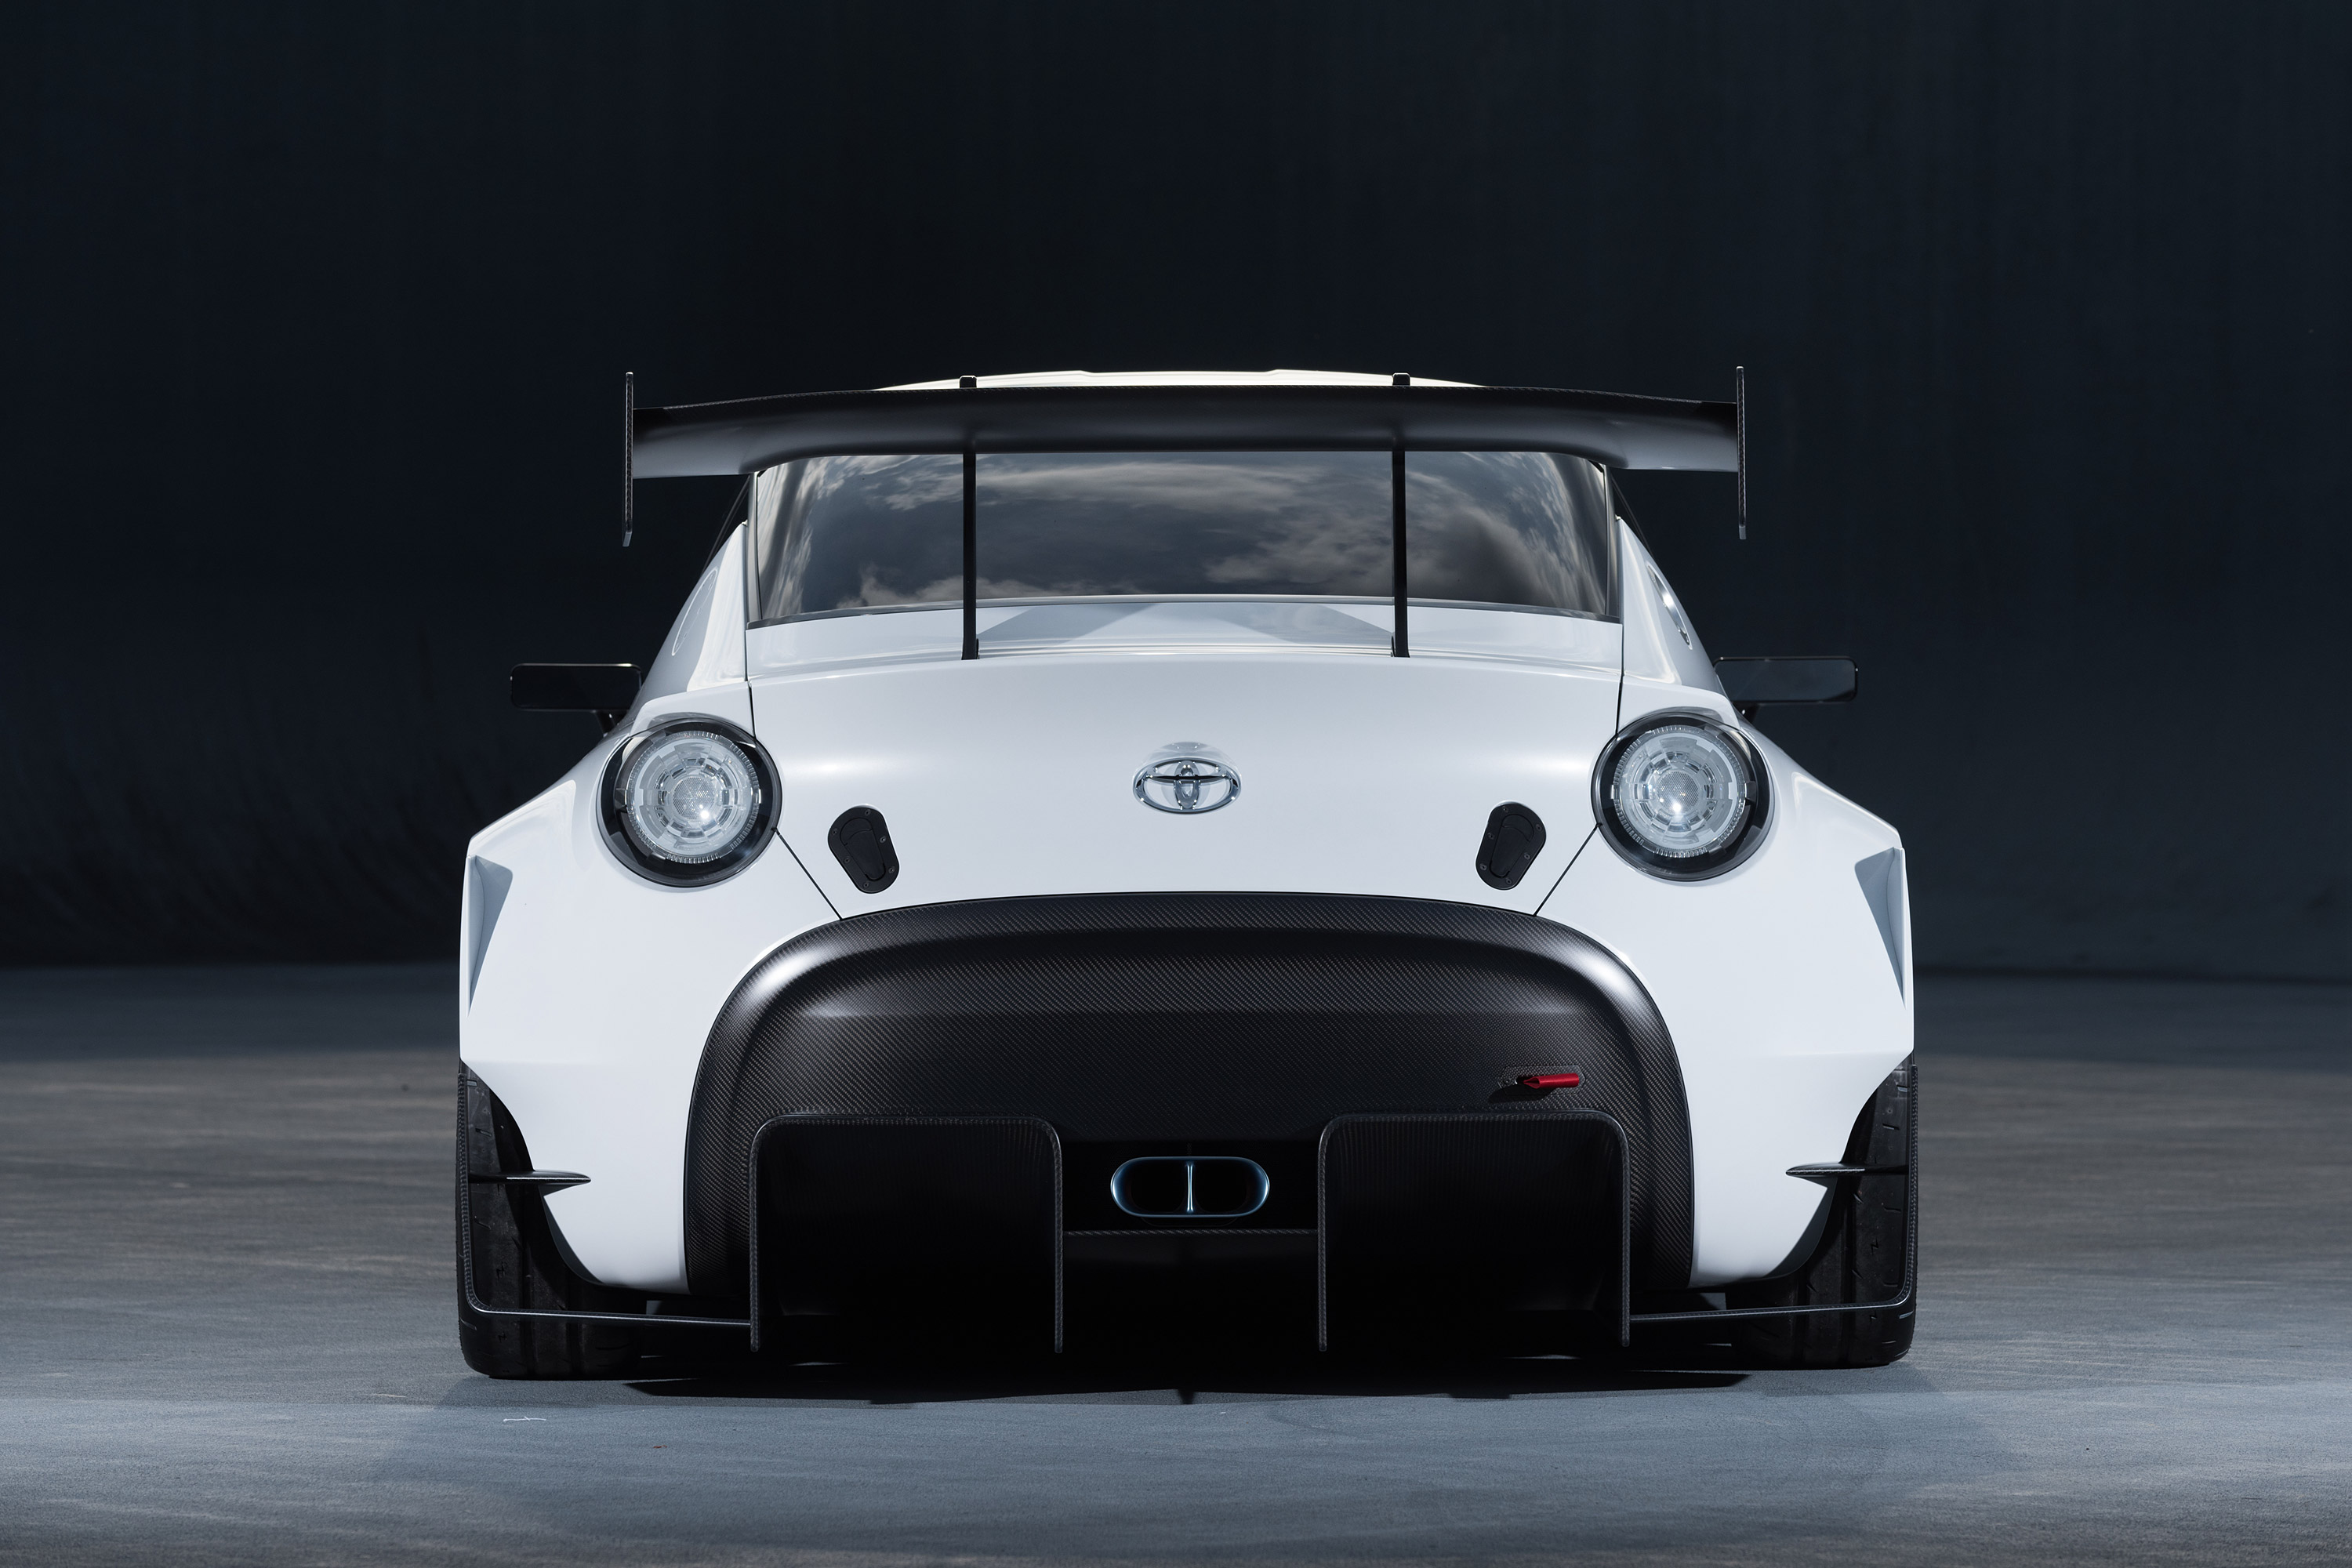  2016 Toyota S-FR Racing Concept Wallpaper.